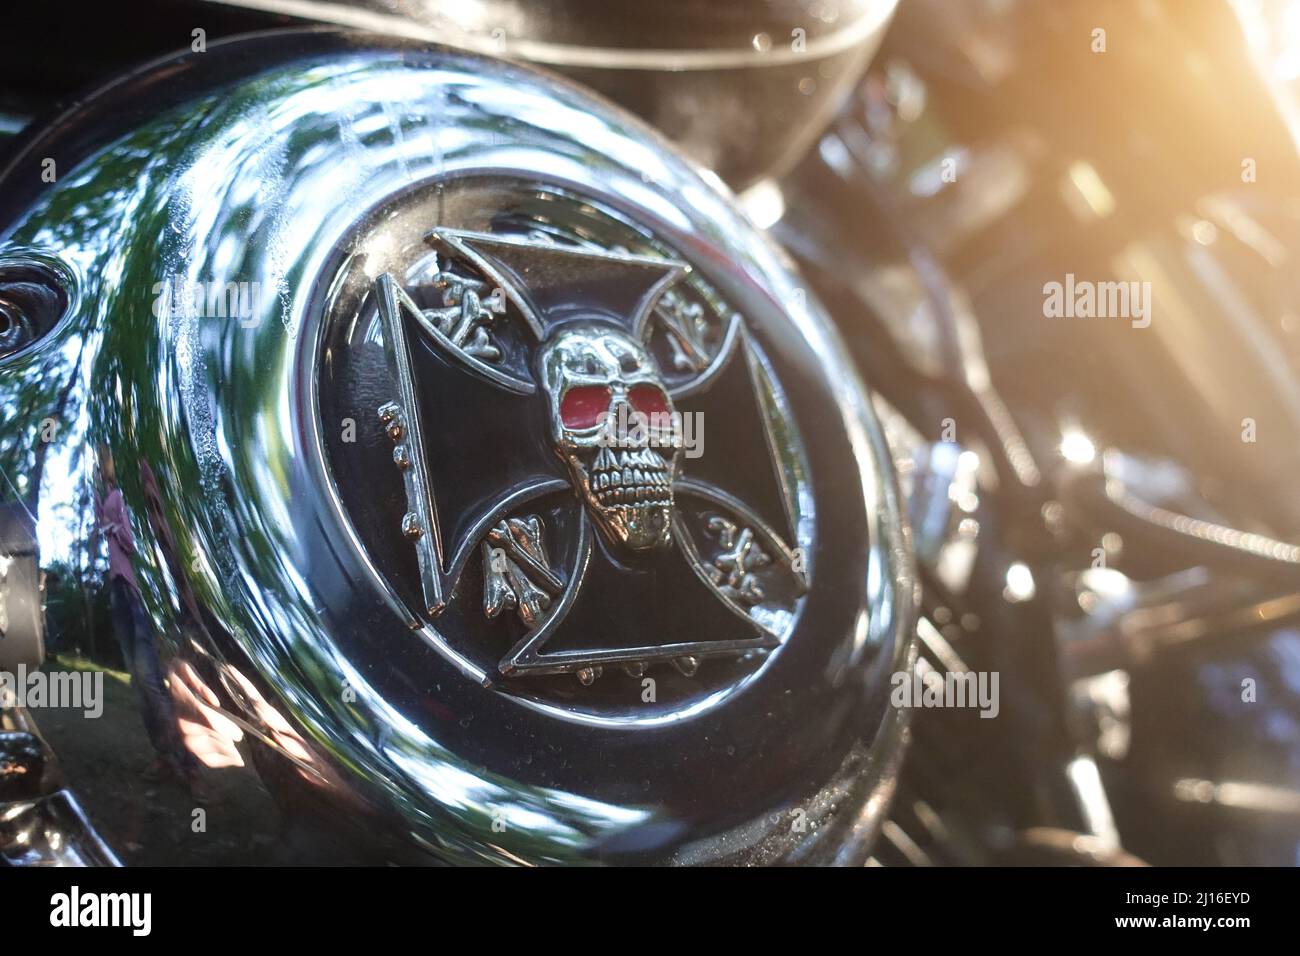 Chromed shiny skull on a motorcycle engine. Motorcycle part Stock Photo